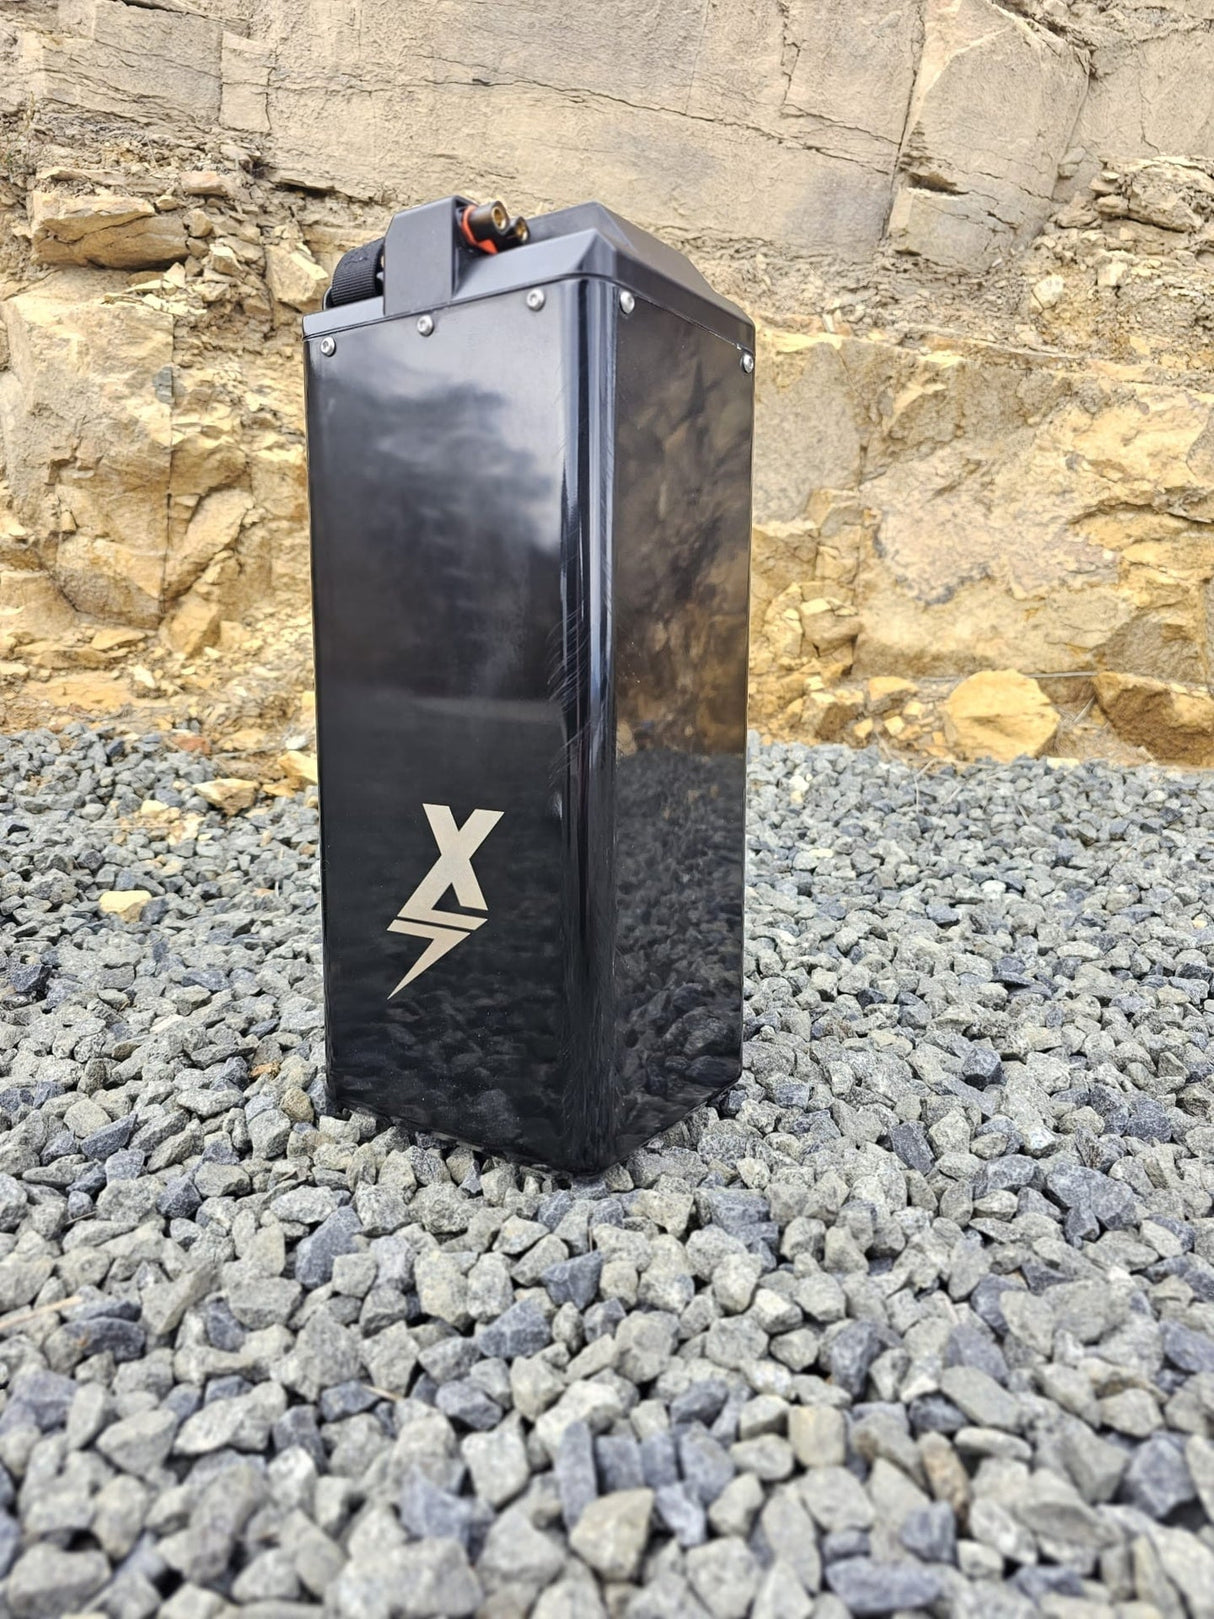 EBMX High Power Batteries for Talaria MX3, MX4